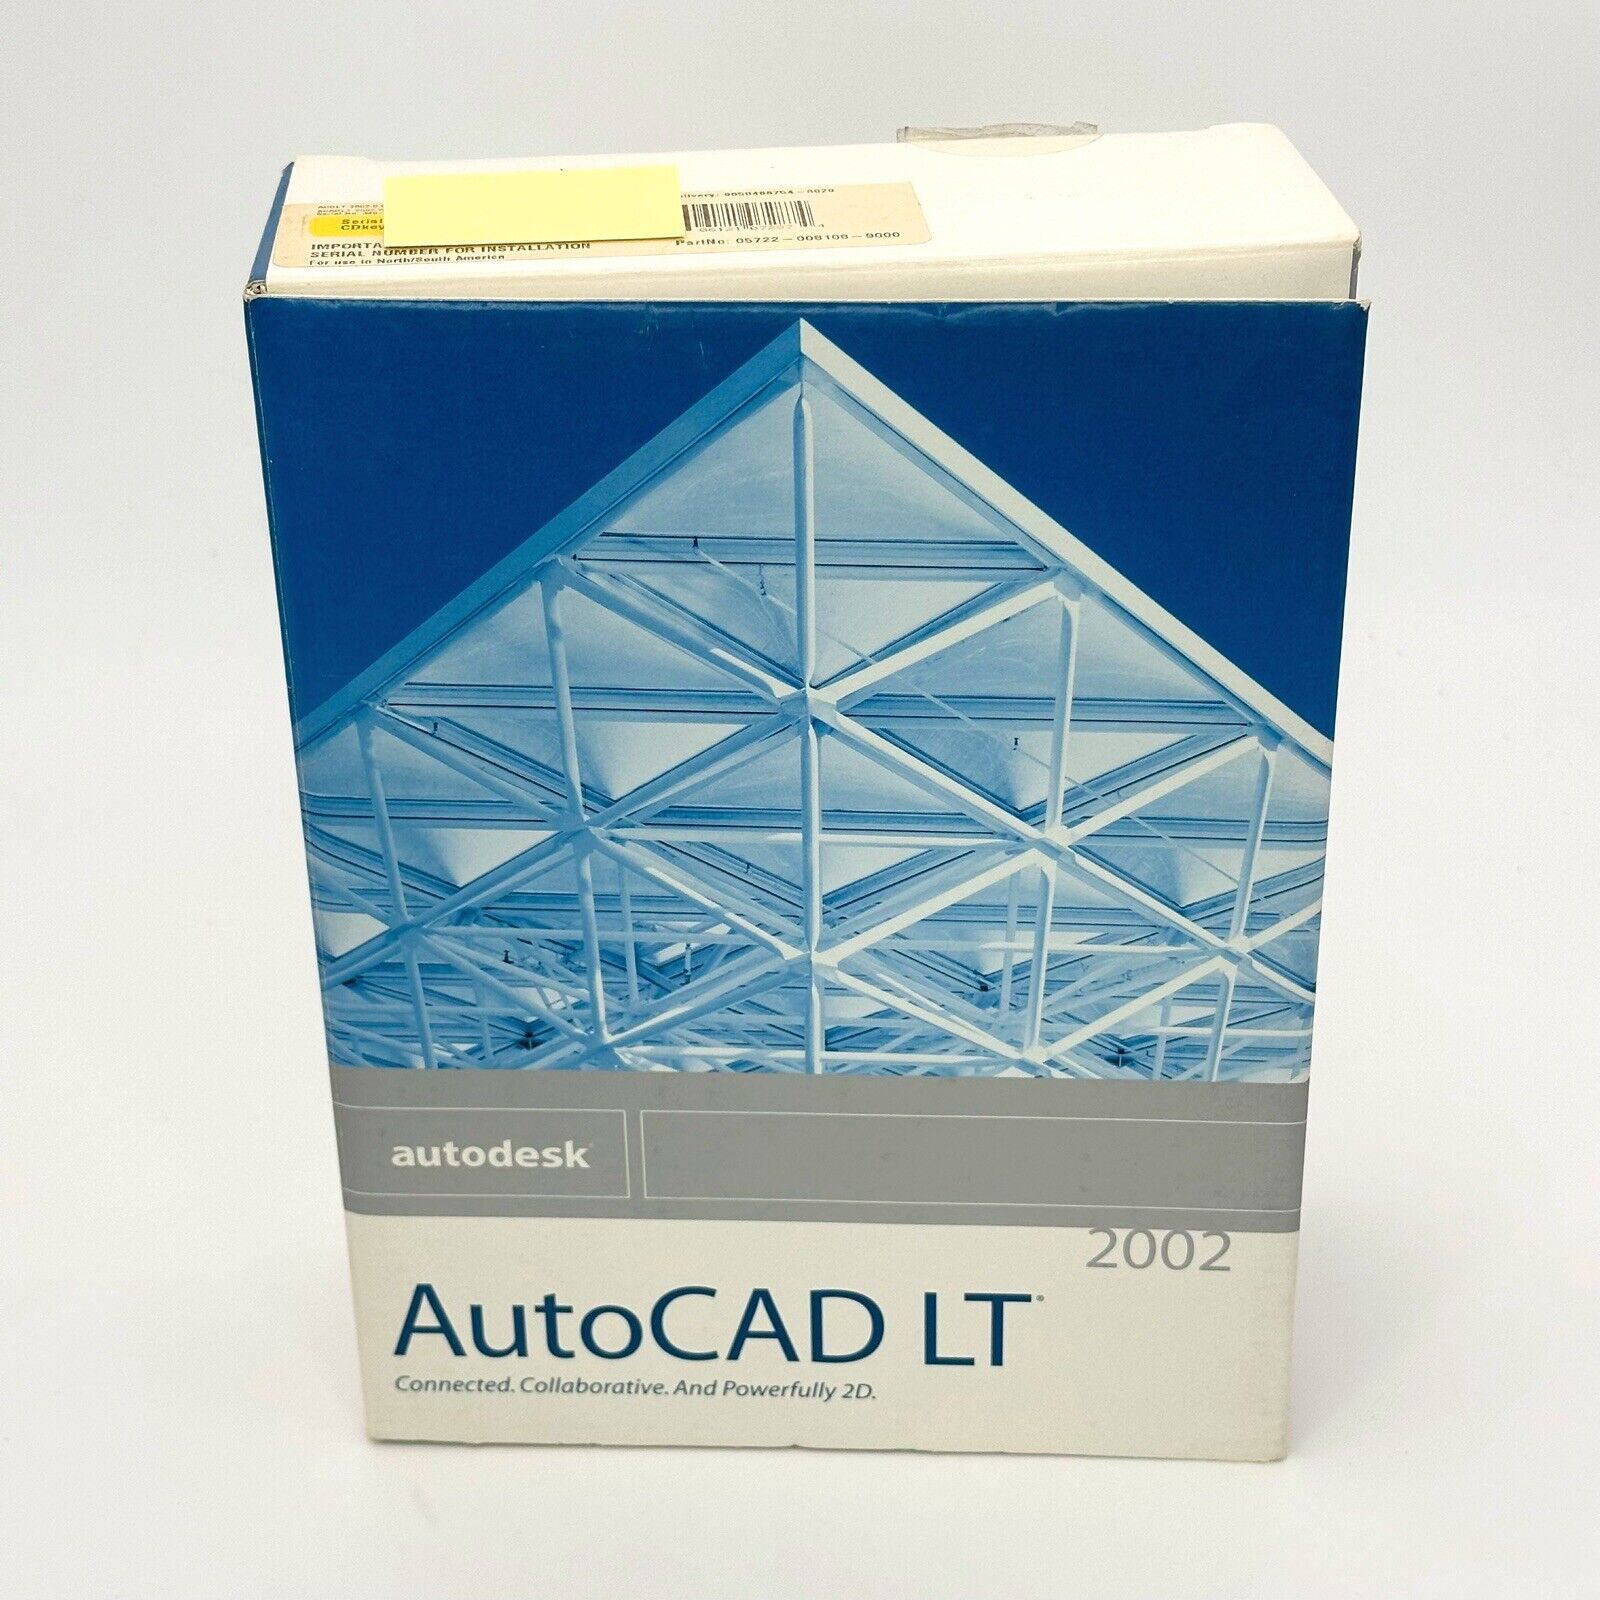 Autodesk AutoCAD LT 2002 CDs with Manual & Untested Key + Bonus LandCadd CD